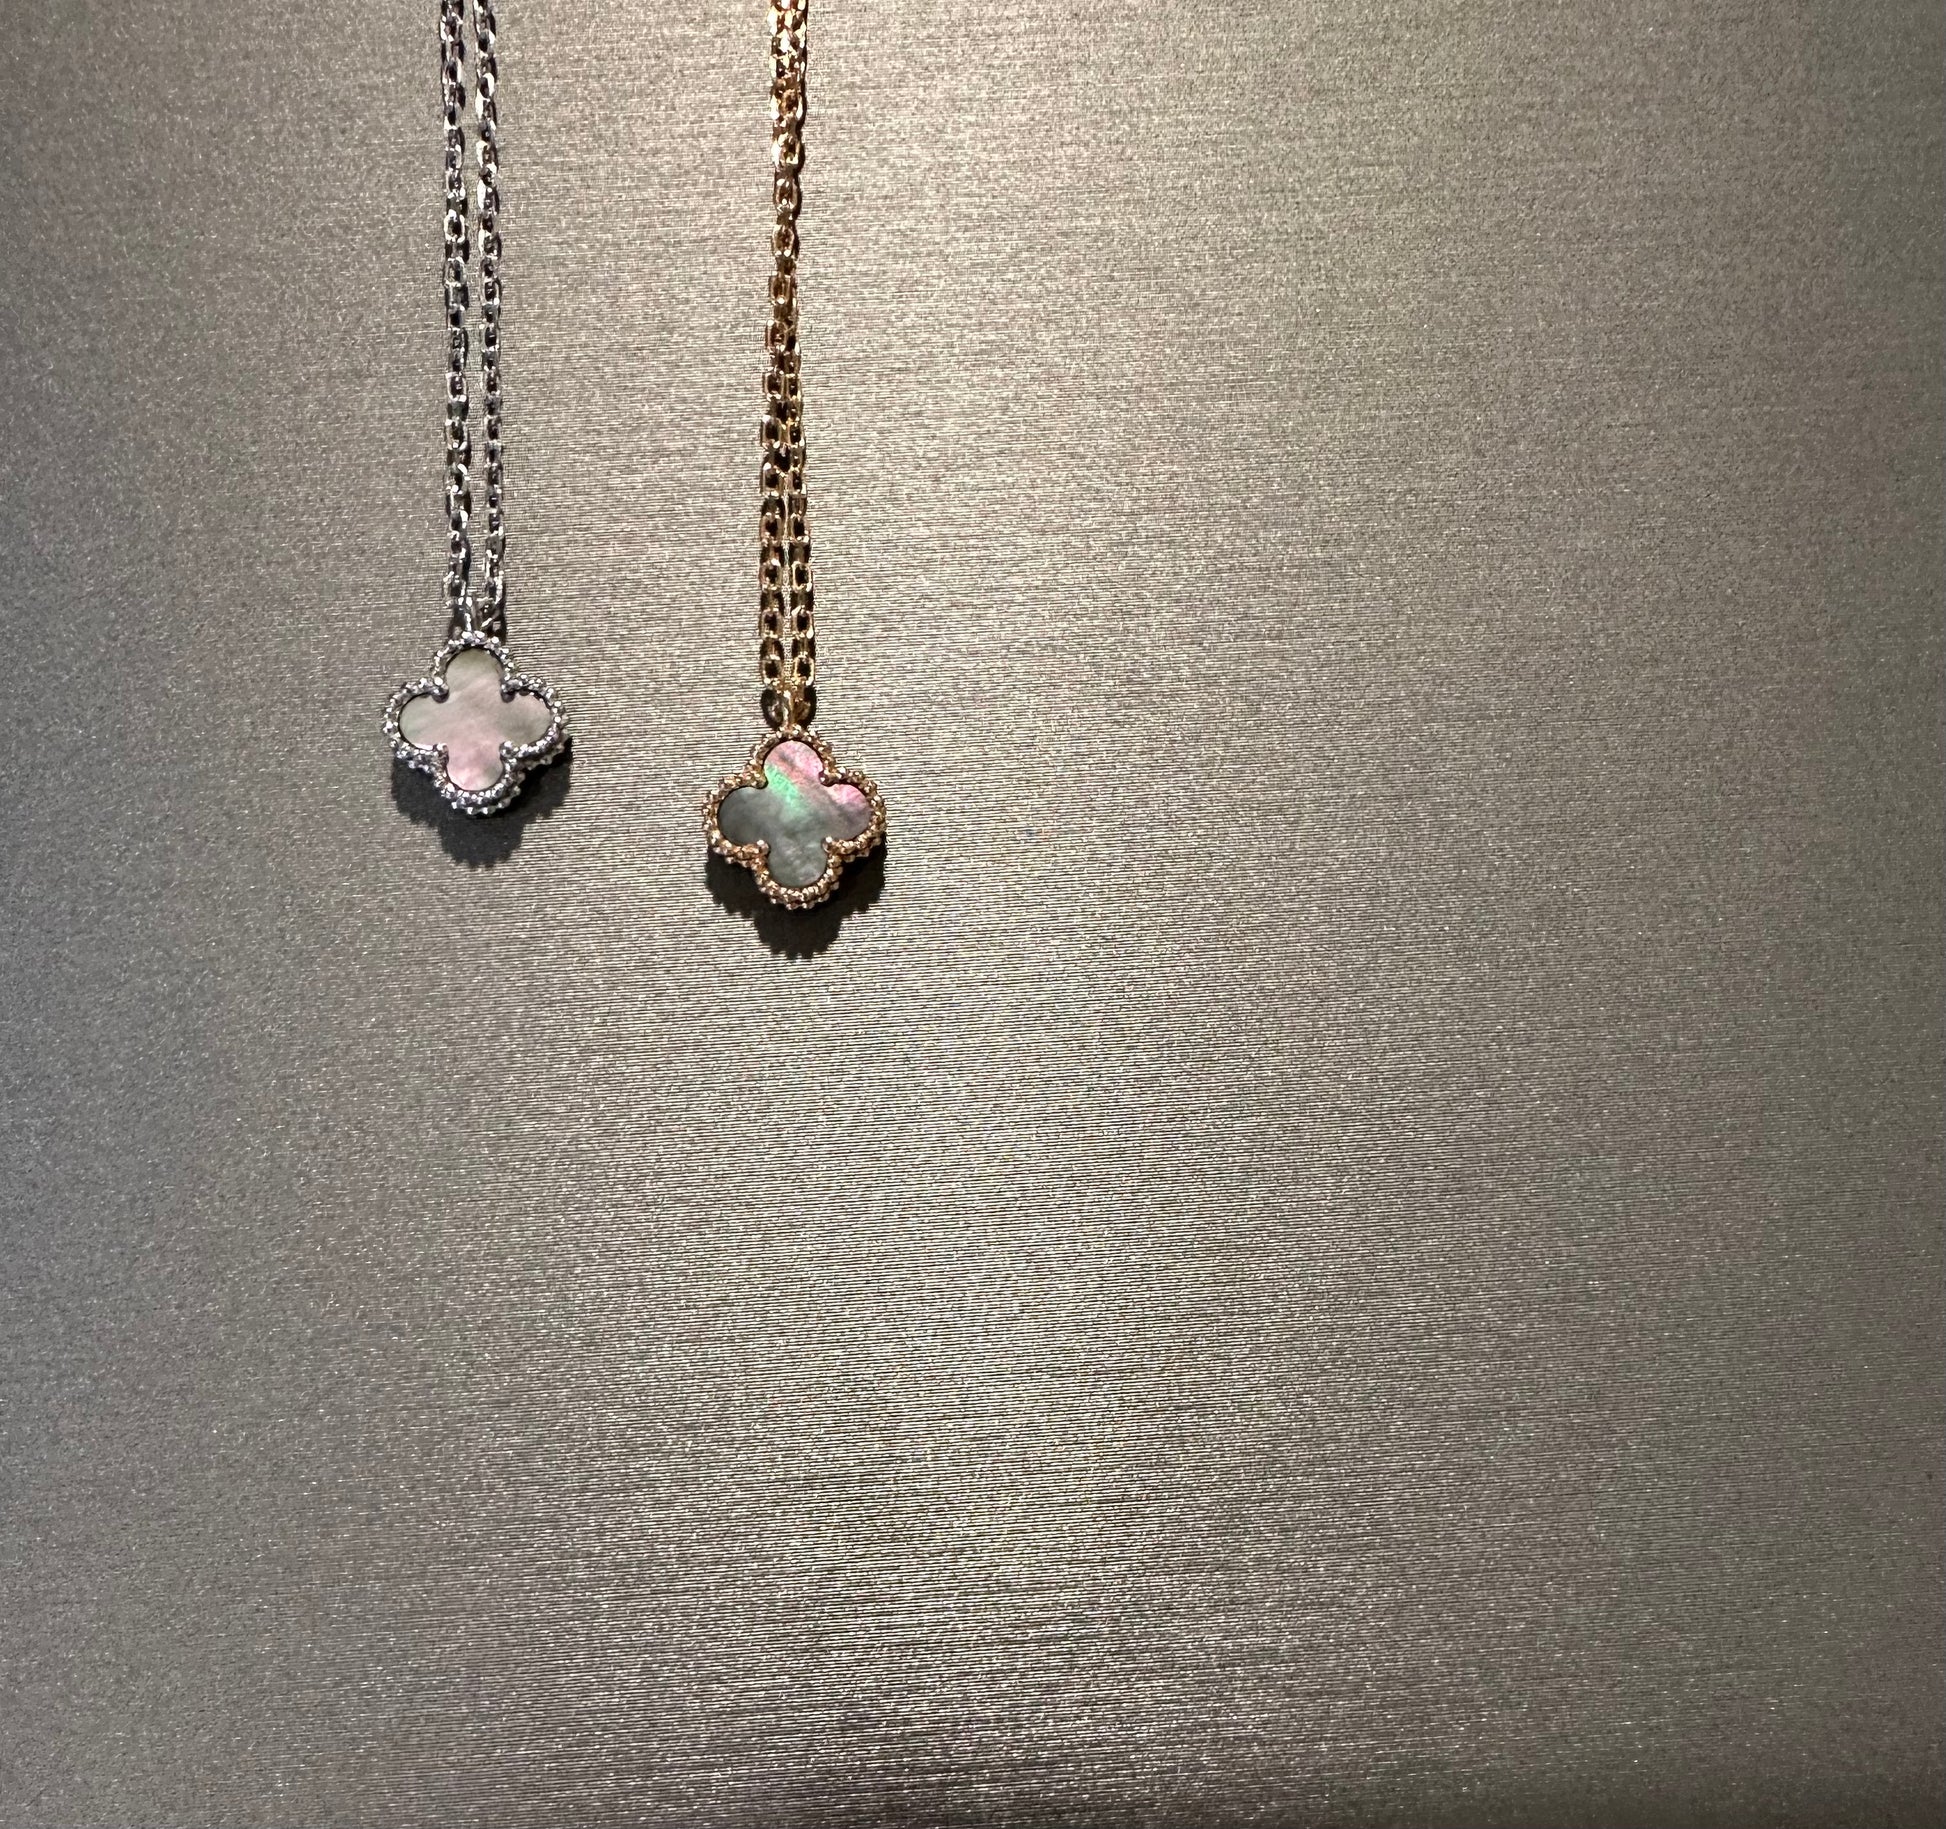 10mm clover single motif clover necklace 925 silver 18k gold plated - ParadiseKissCo